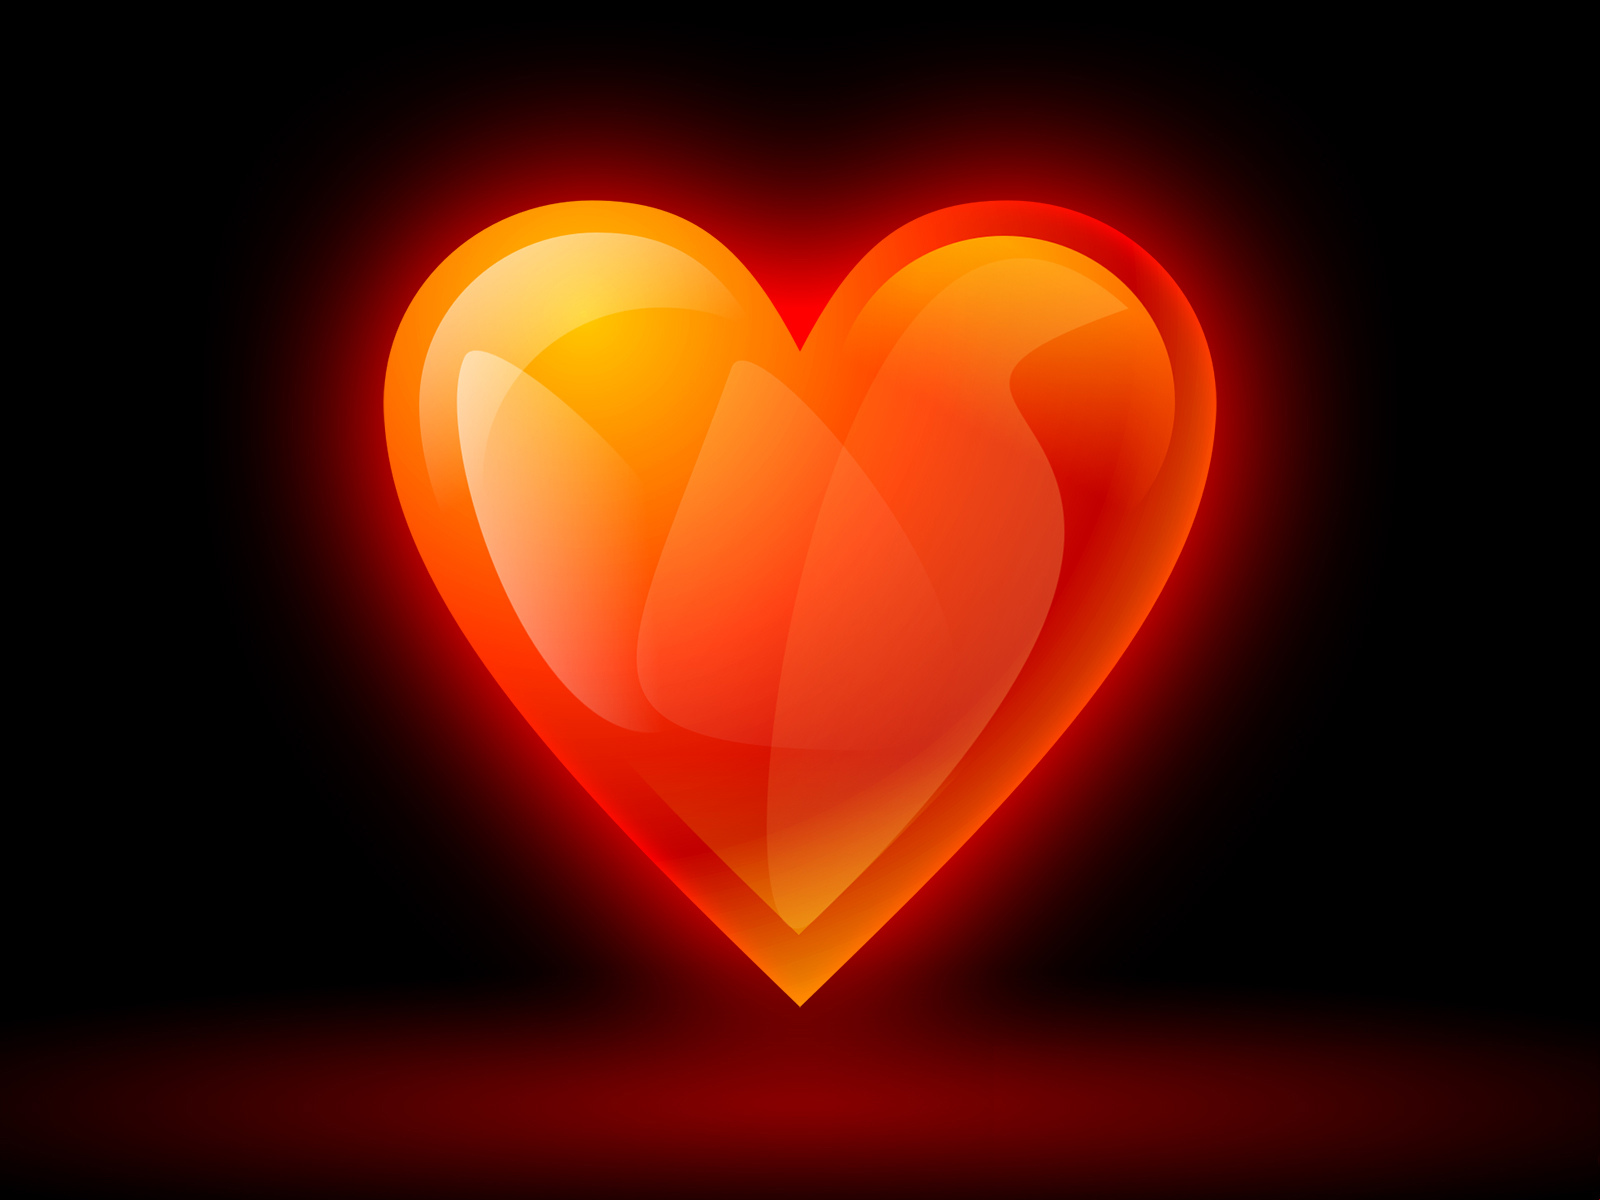 https://blogger.googleusercontent.com/img/b/R29vZ2xl/AVvXsEikDezSYsoUQgc5Rjt5PQtZWOv5bqxdXLcacKImpX6dcaZl2Pin7OBfjpYHUsZ6dlbUNqsRr9tlGiIzlNuswXted2mwOjbnm64PmGt381IM0aCY5r4uDq82vZA0hVmJalwiBWXQKl4ZIl4/s1600/flaming-heart-wallpaper.jpg